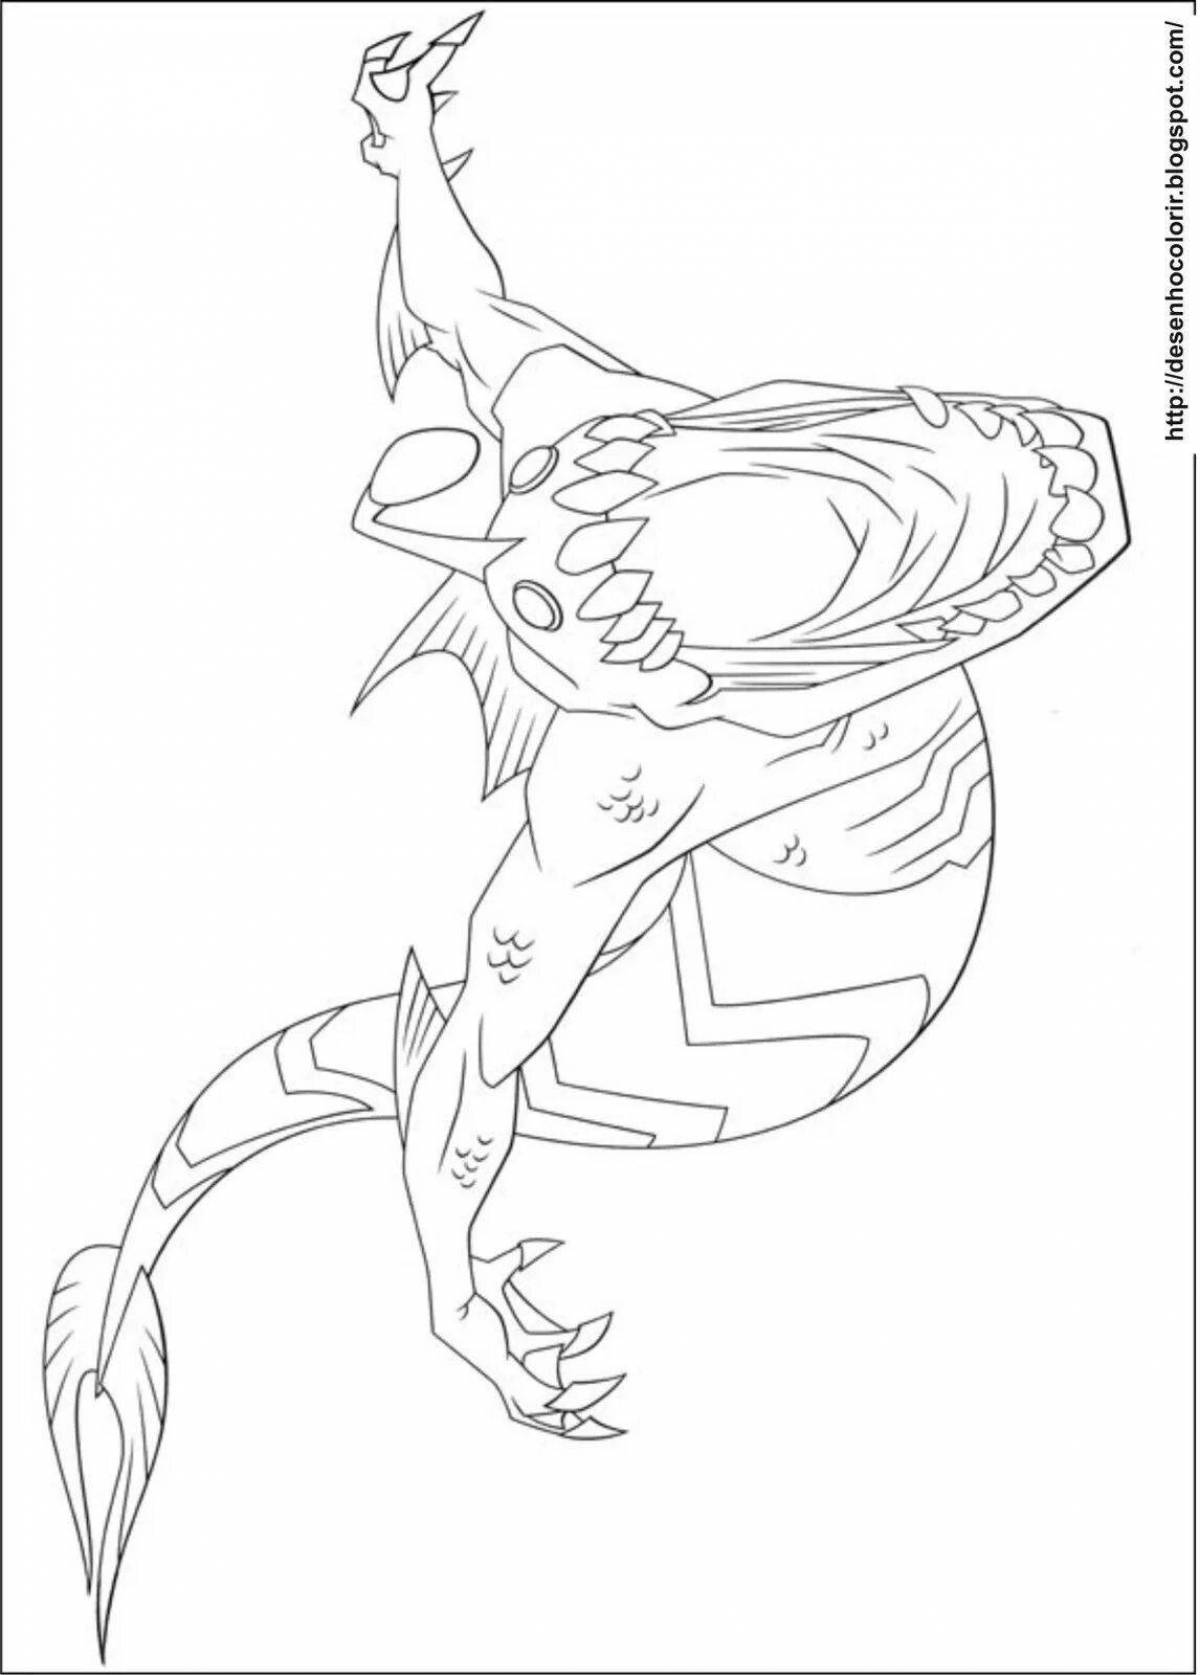 Coloring page cute amphibian man